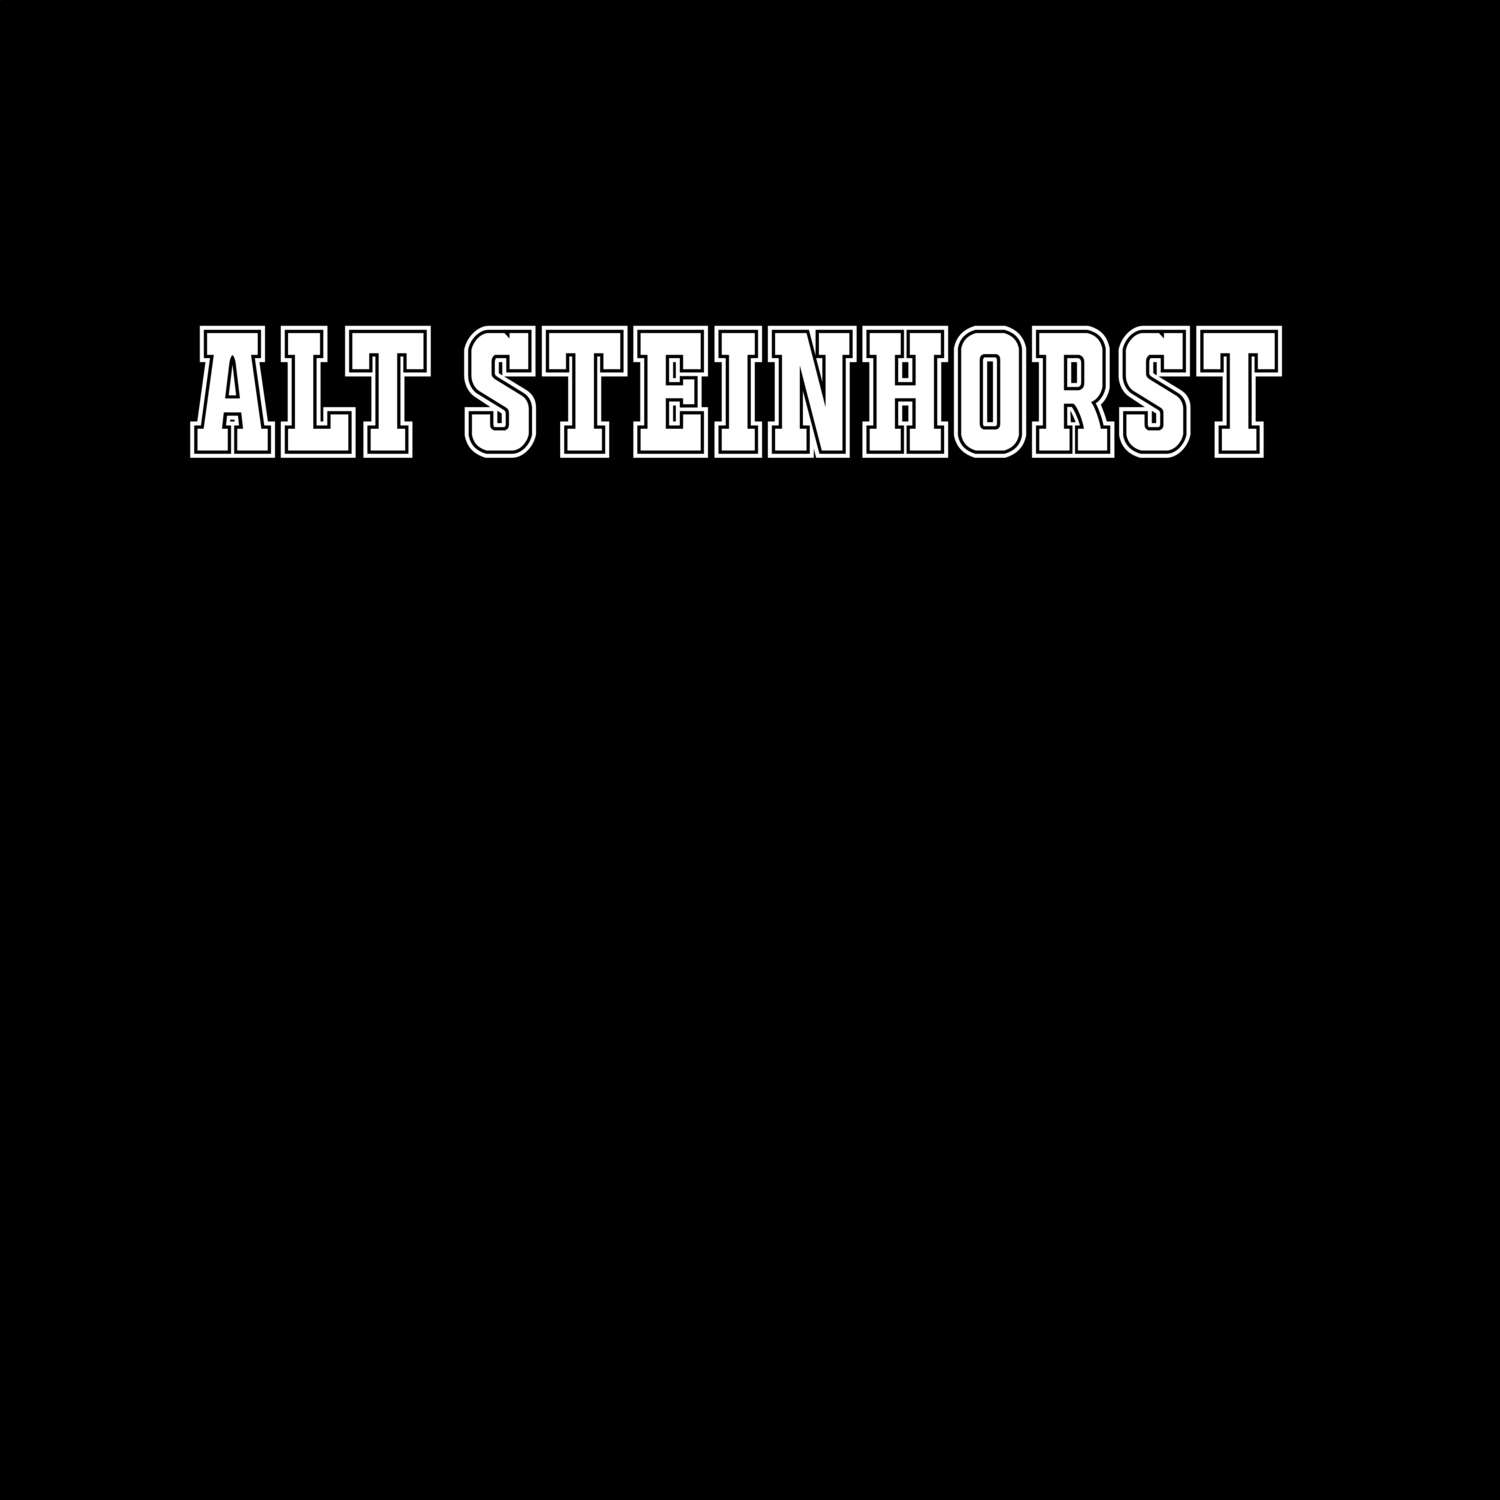 Alt Steinhorst T-Shirt »Classic«